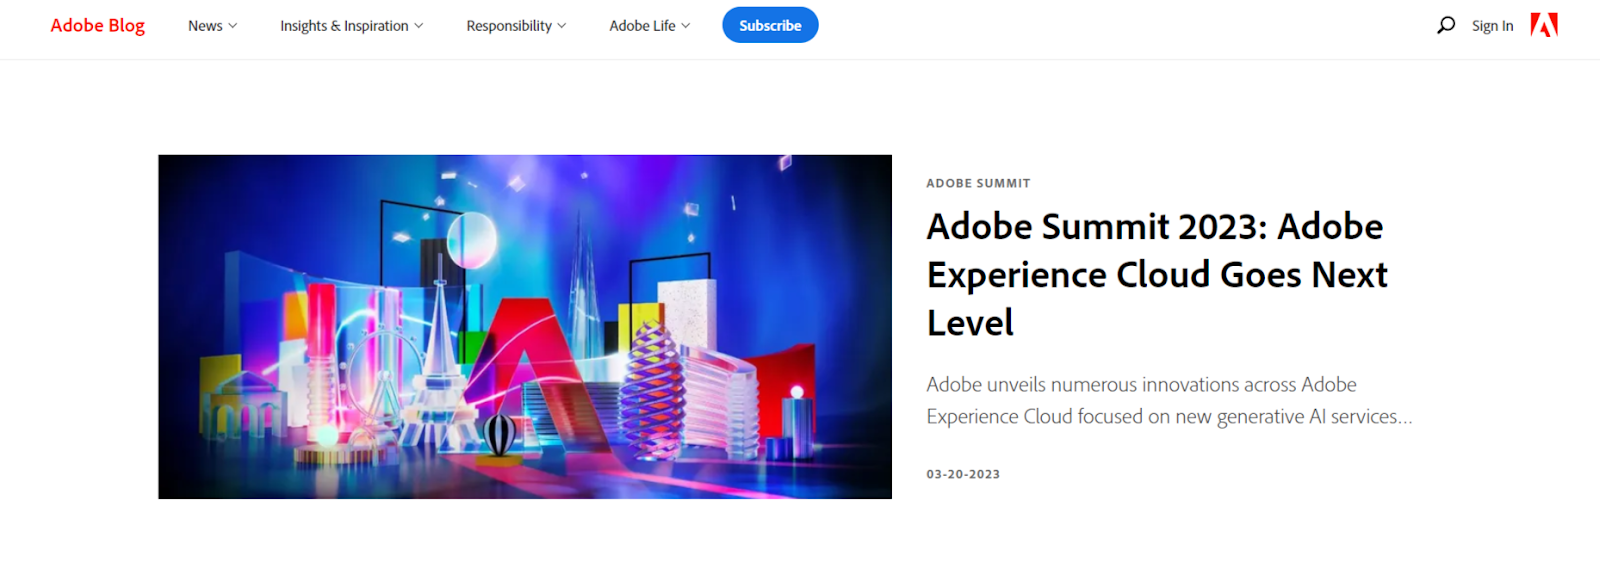 Adobe blog